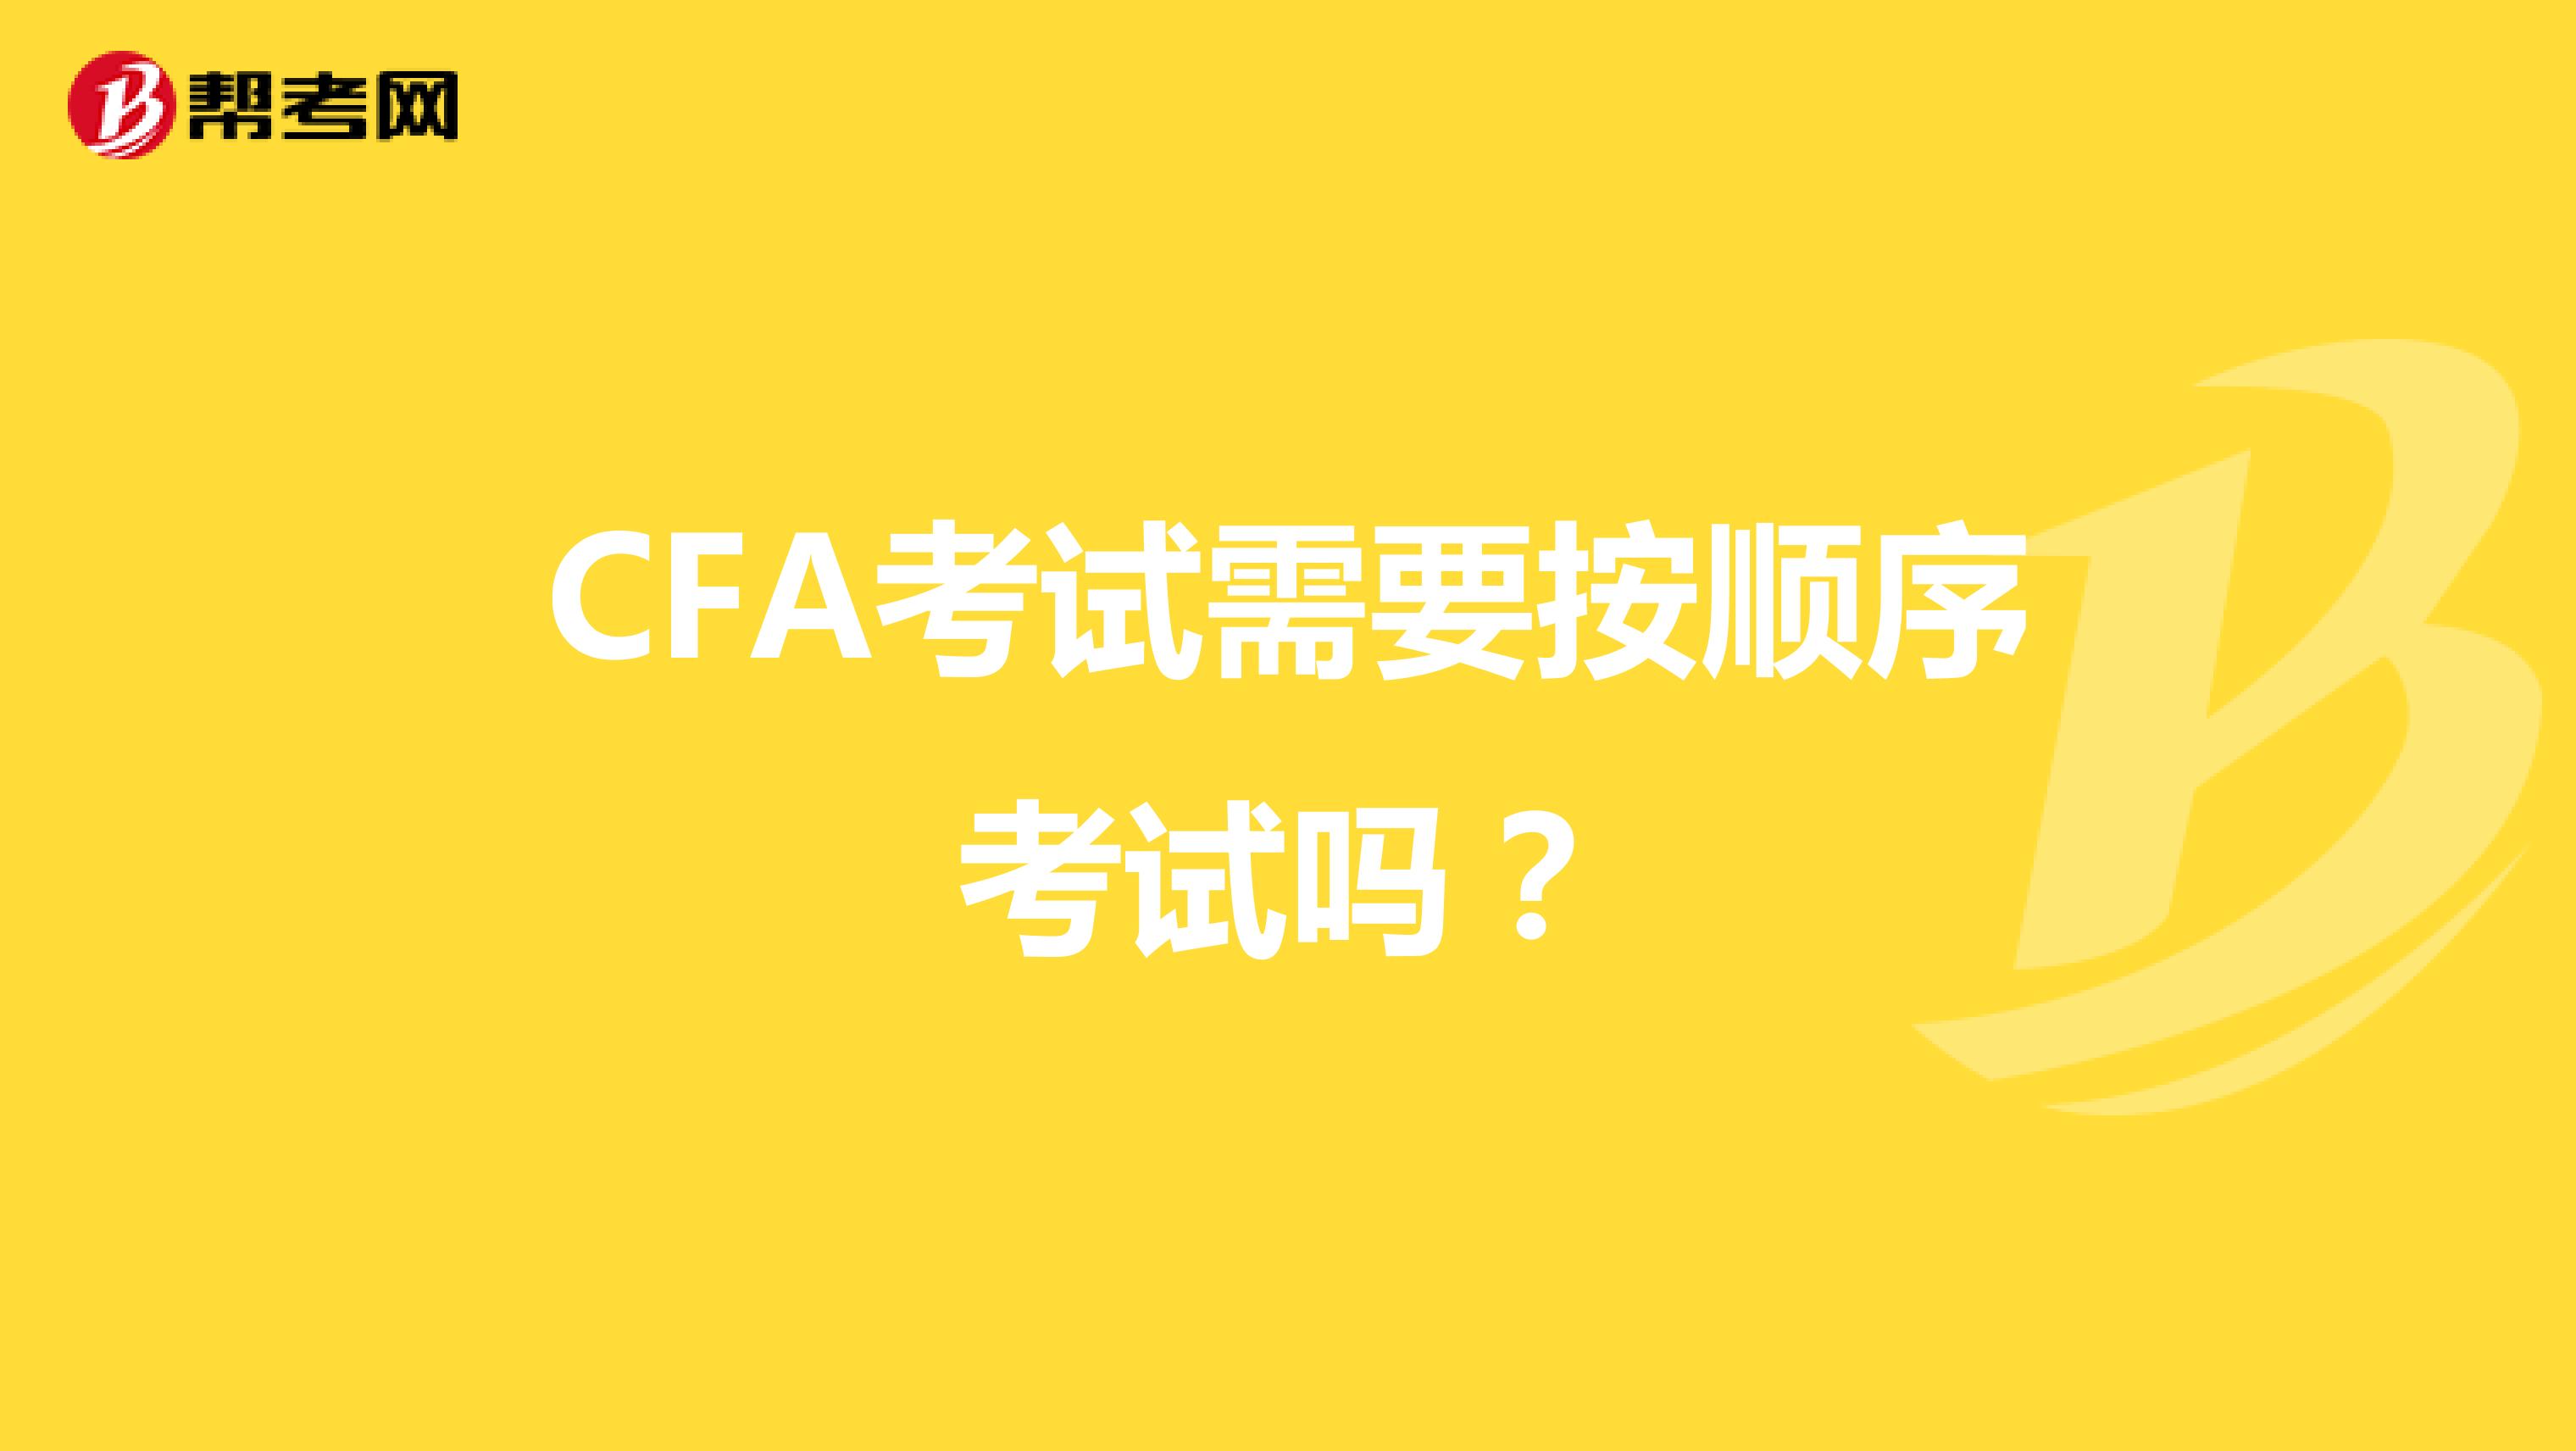 CFA考试需要按顺序考试吗？